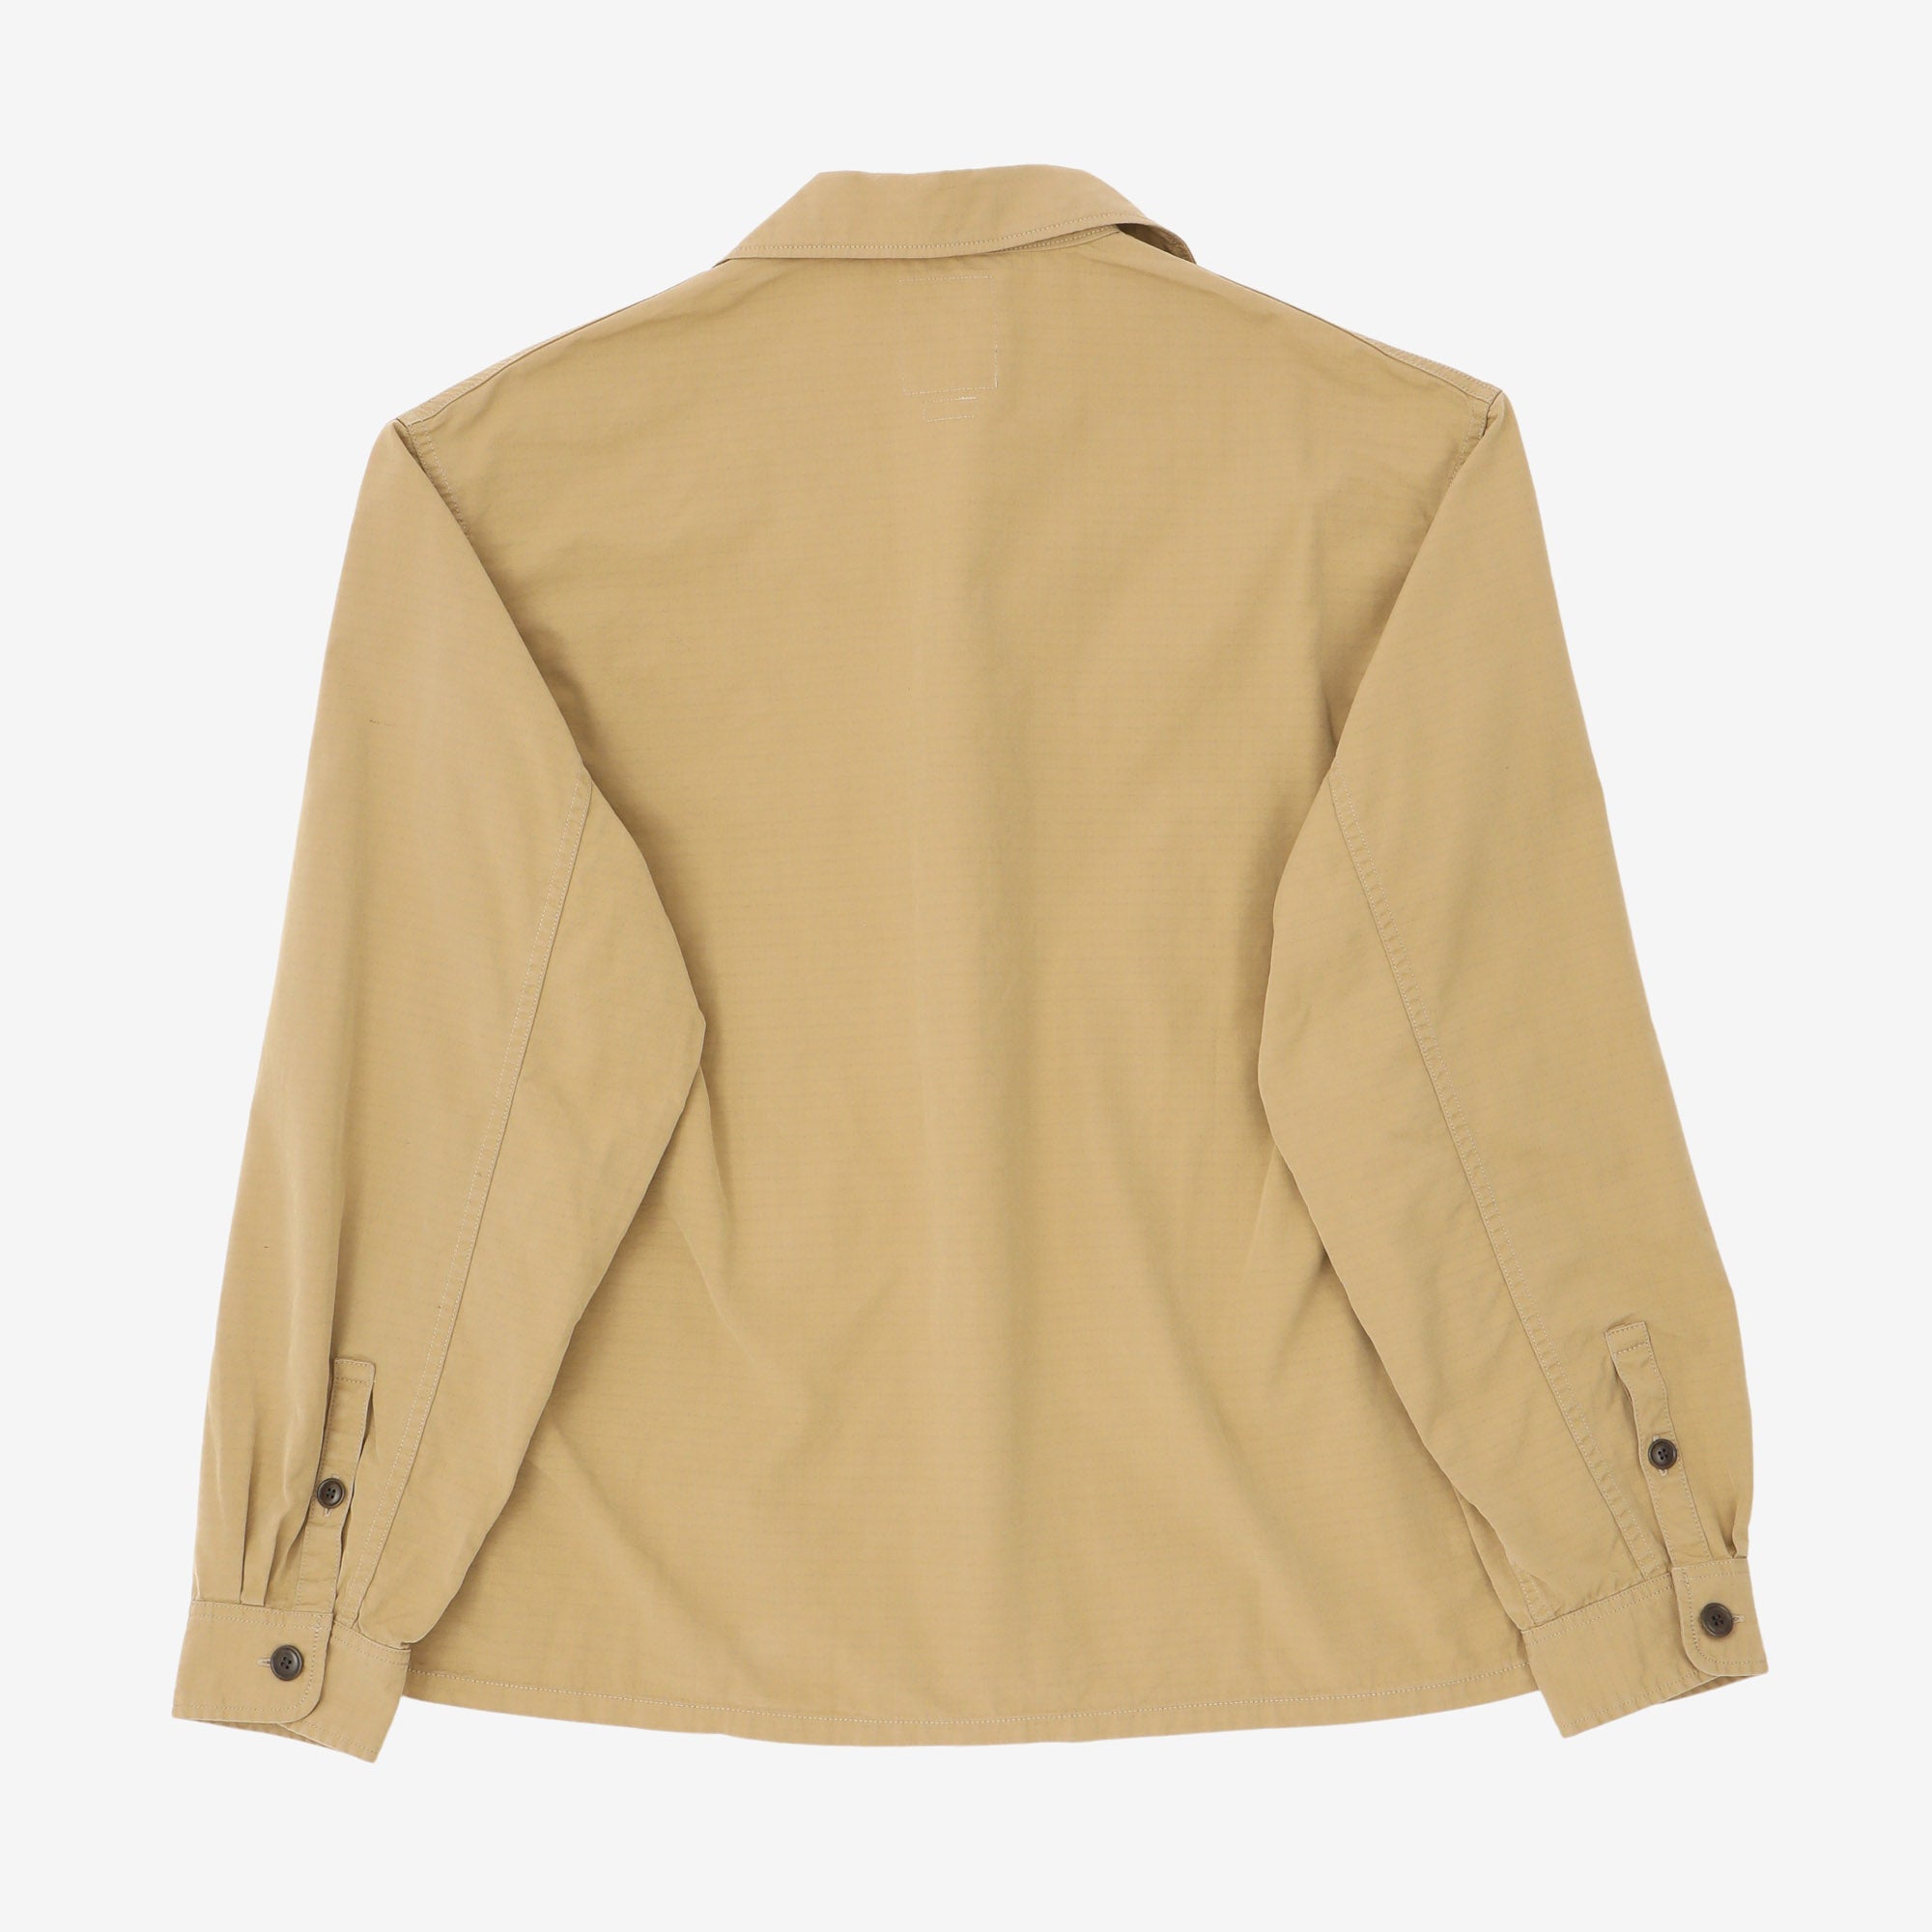 Wilco Shirt Jacket